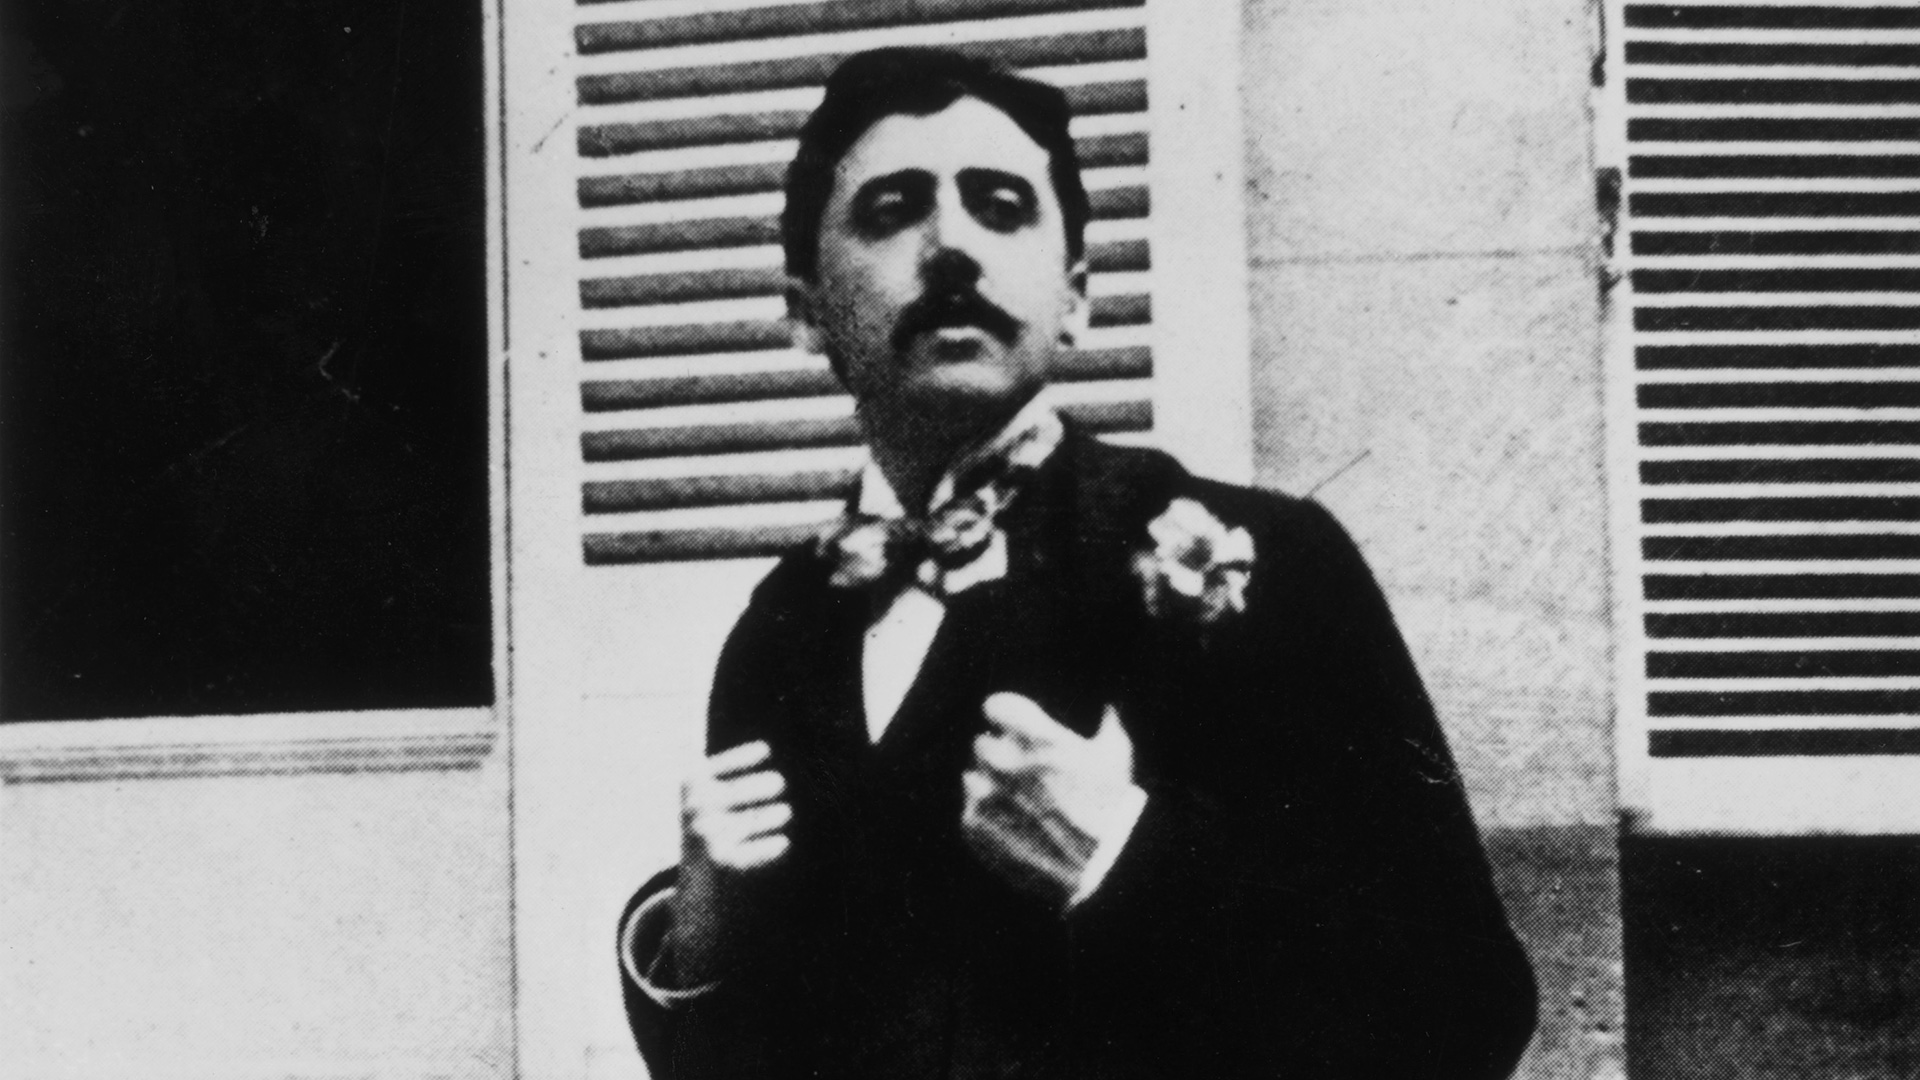 El escritor francés Marcel Proust sentado frente a una ventana, hacia 1910.  (Hulton Archive/Getty Images)